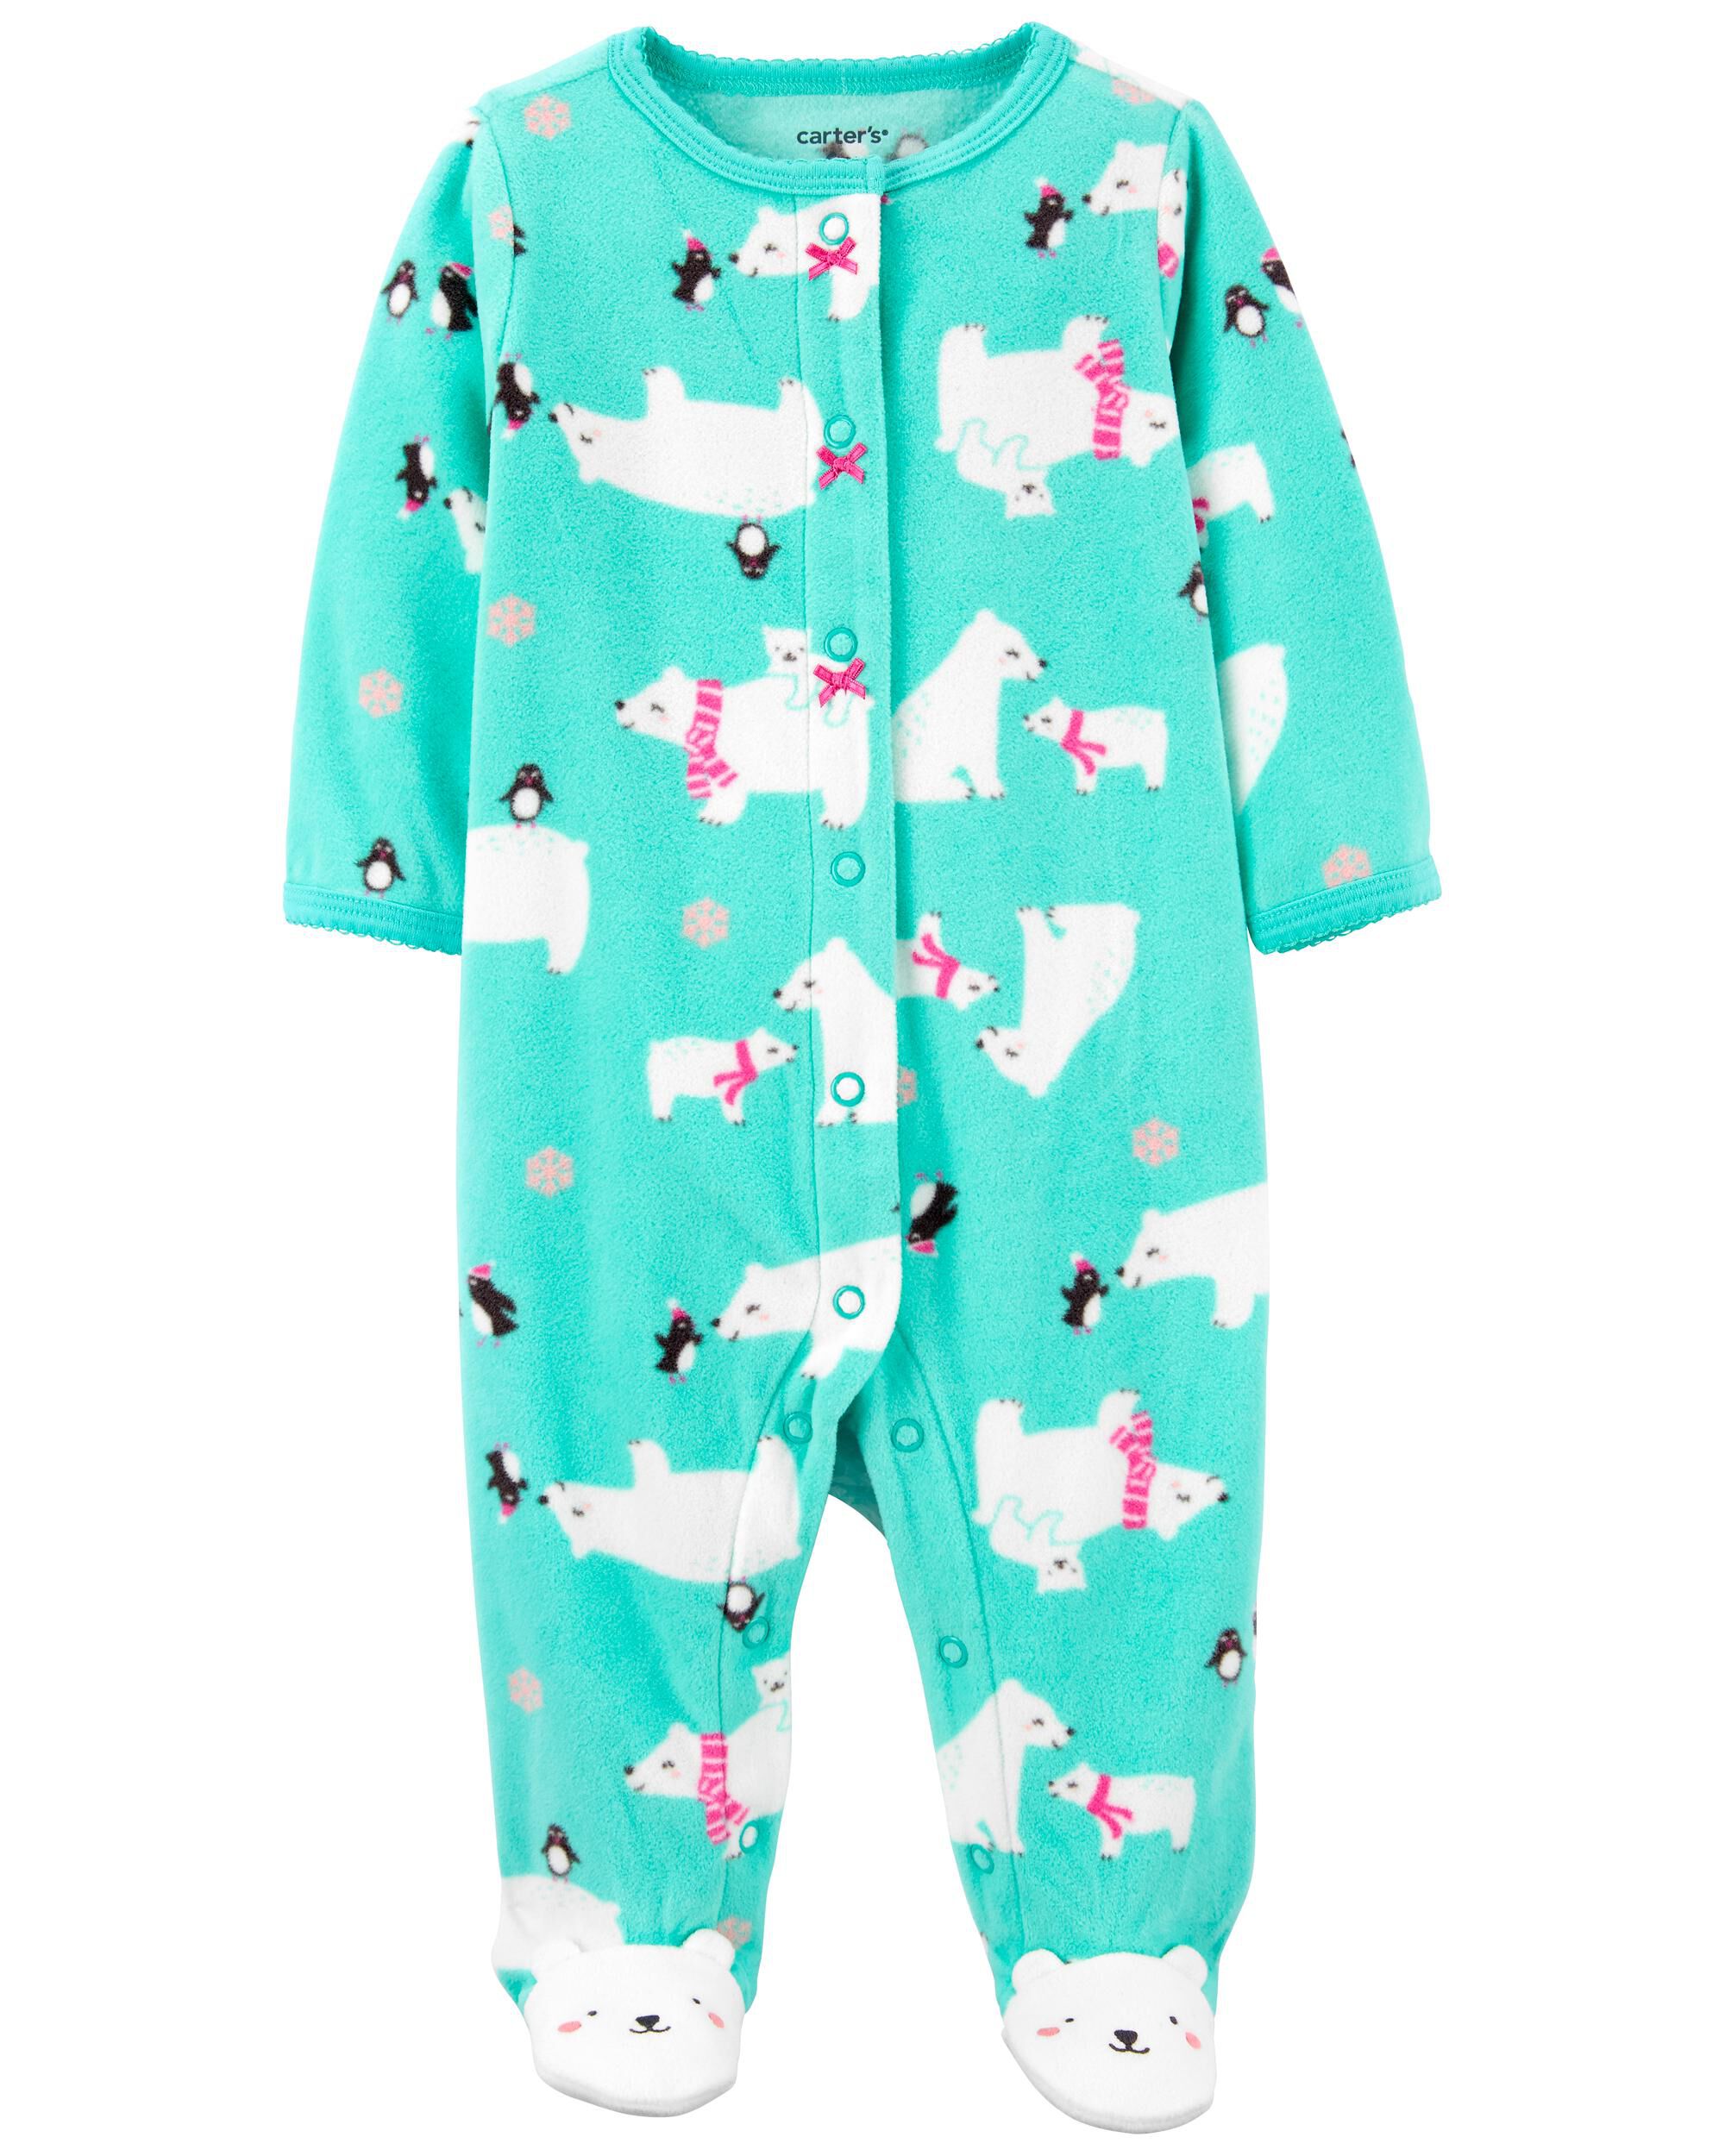 Carter's Baby Sleep & Play Fleece Pajamas PJs Footies Turquoise Skiing Bear NWT 